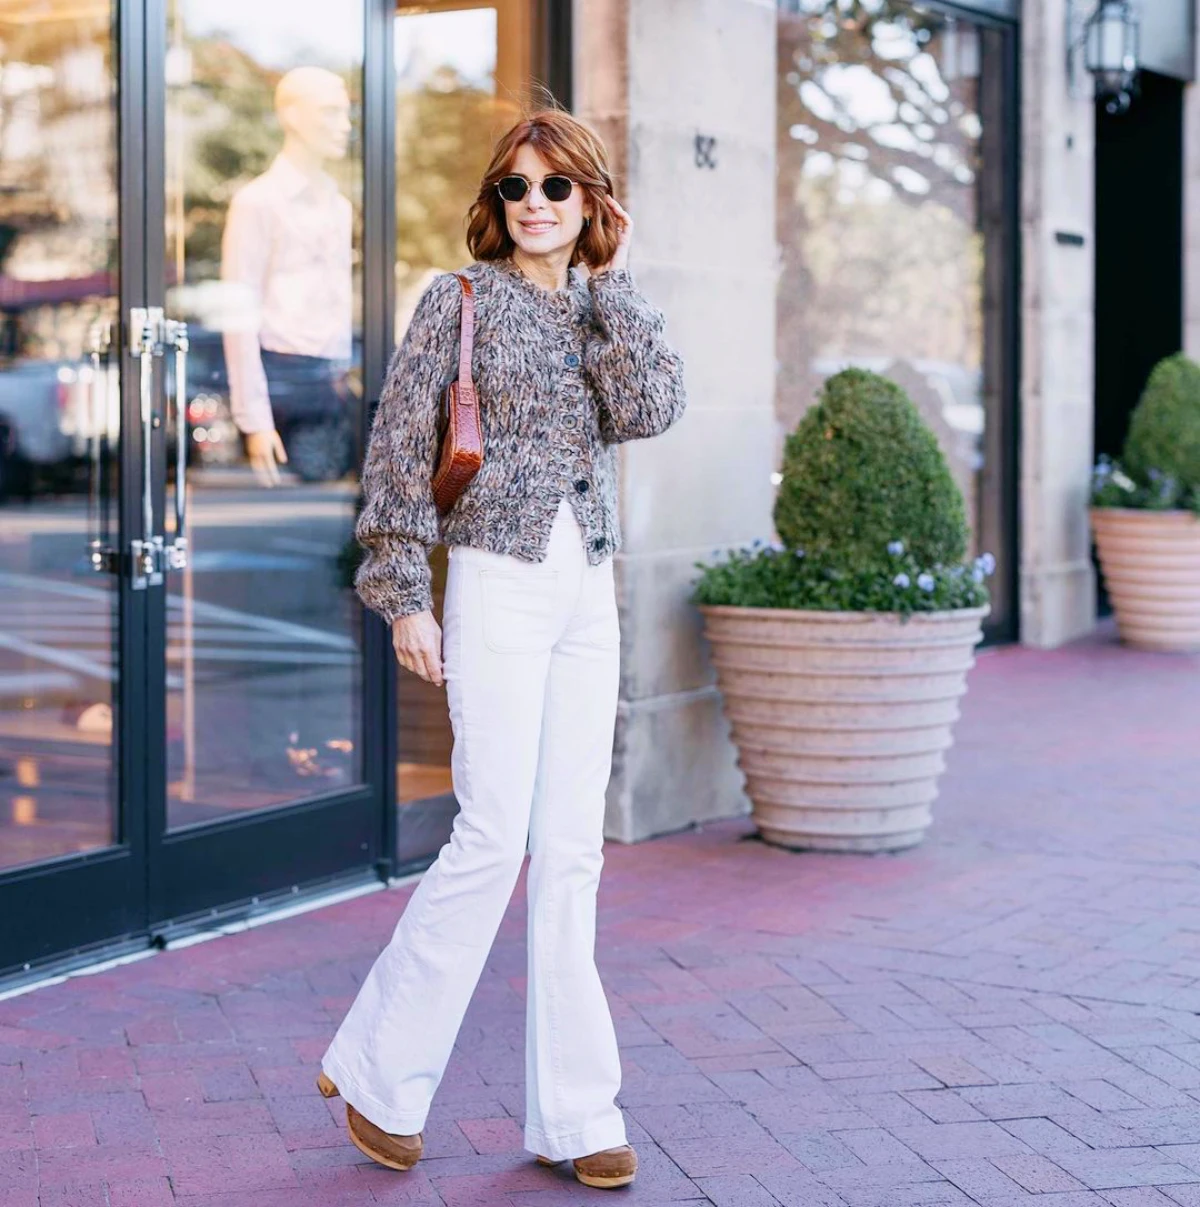 femme 50 ans tendance mode bottines marron jean blanc